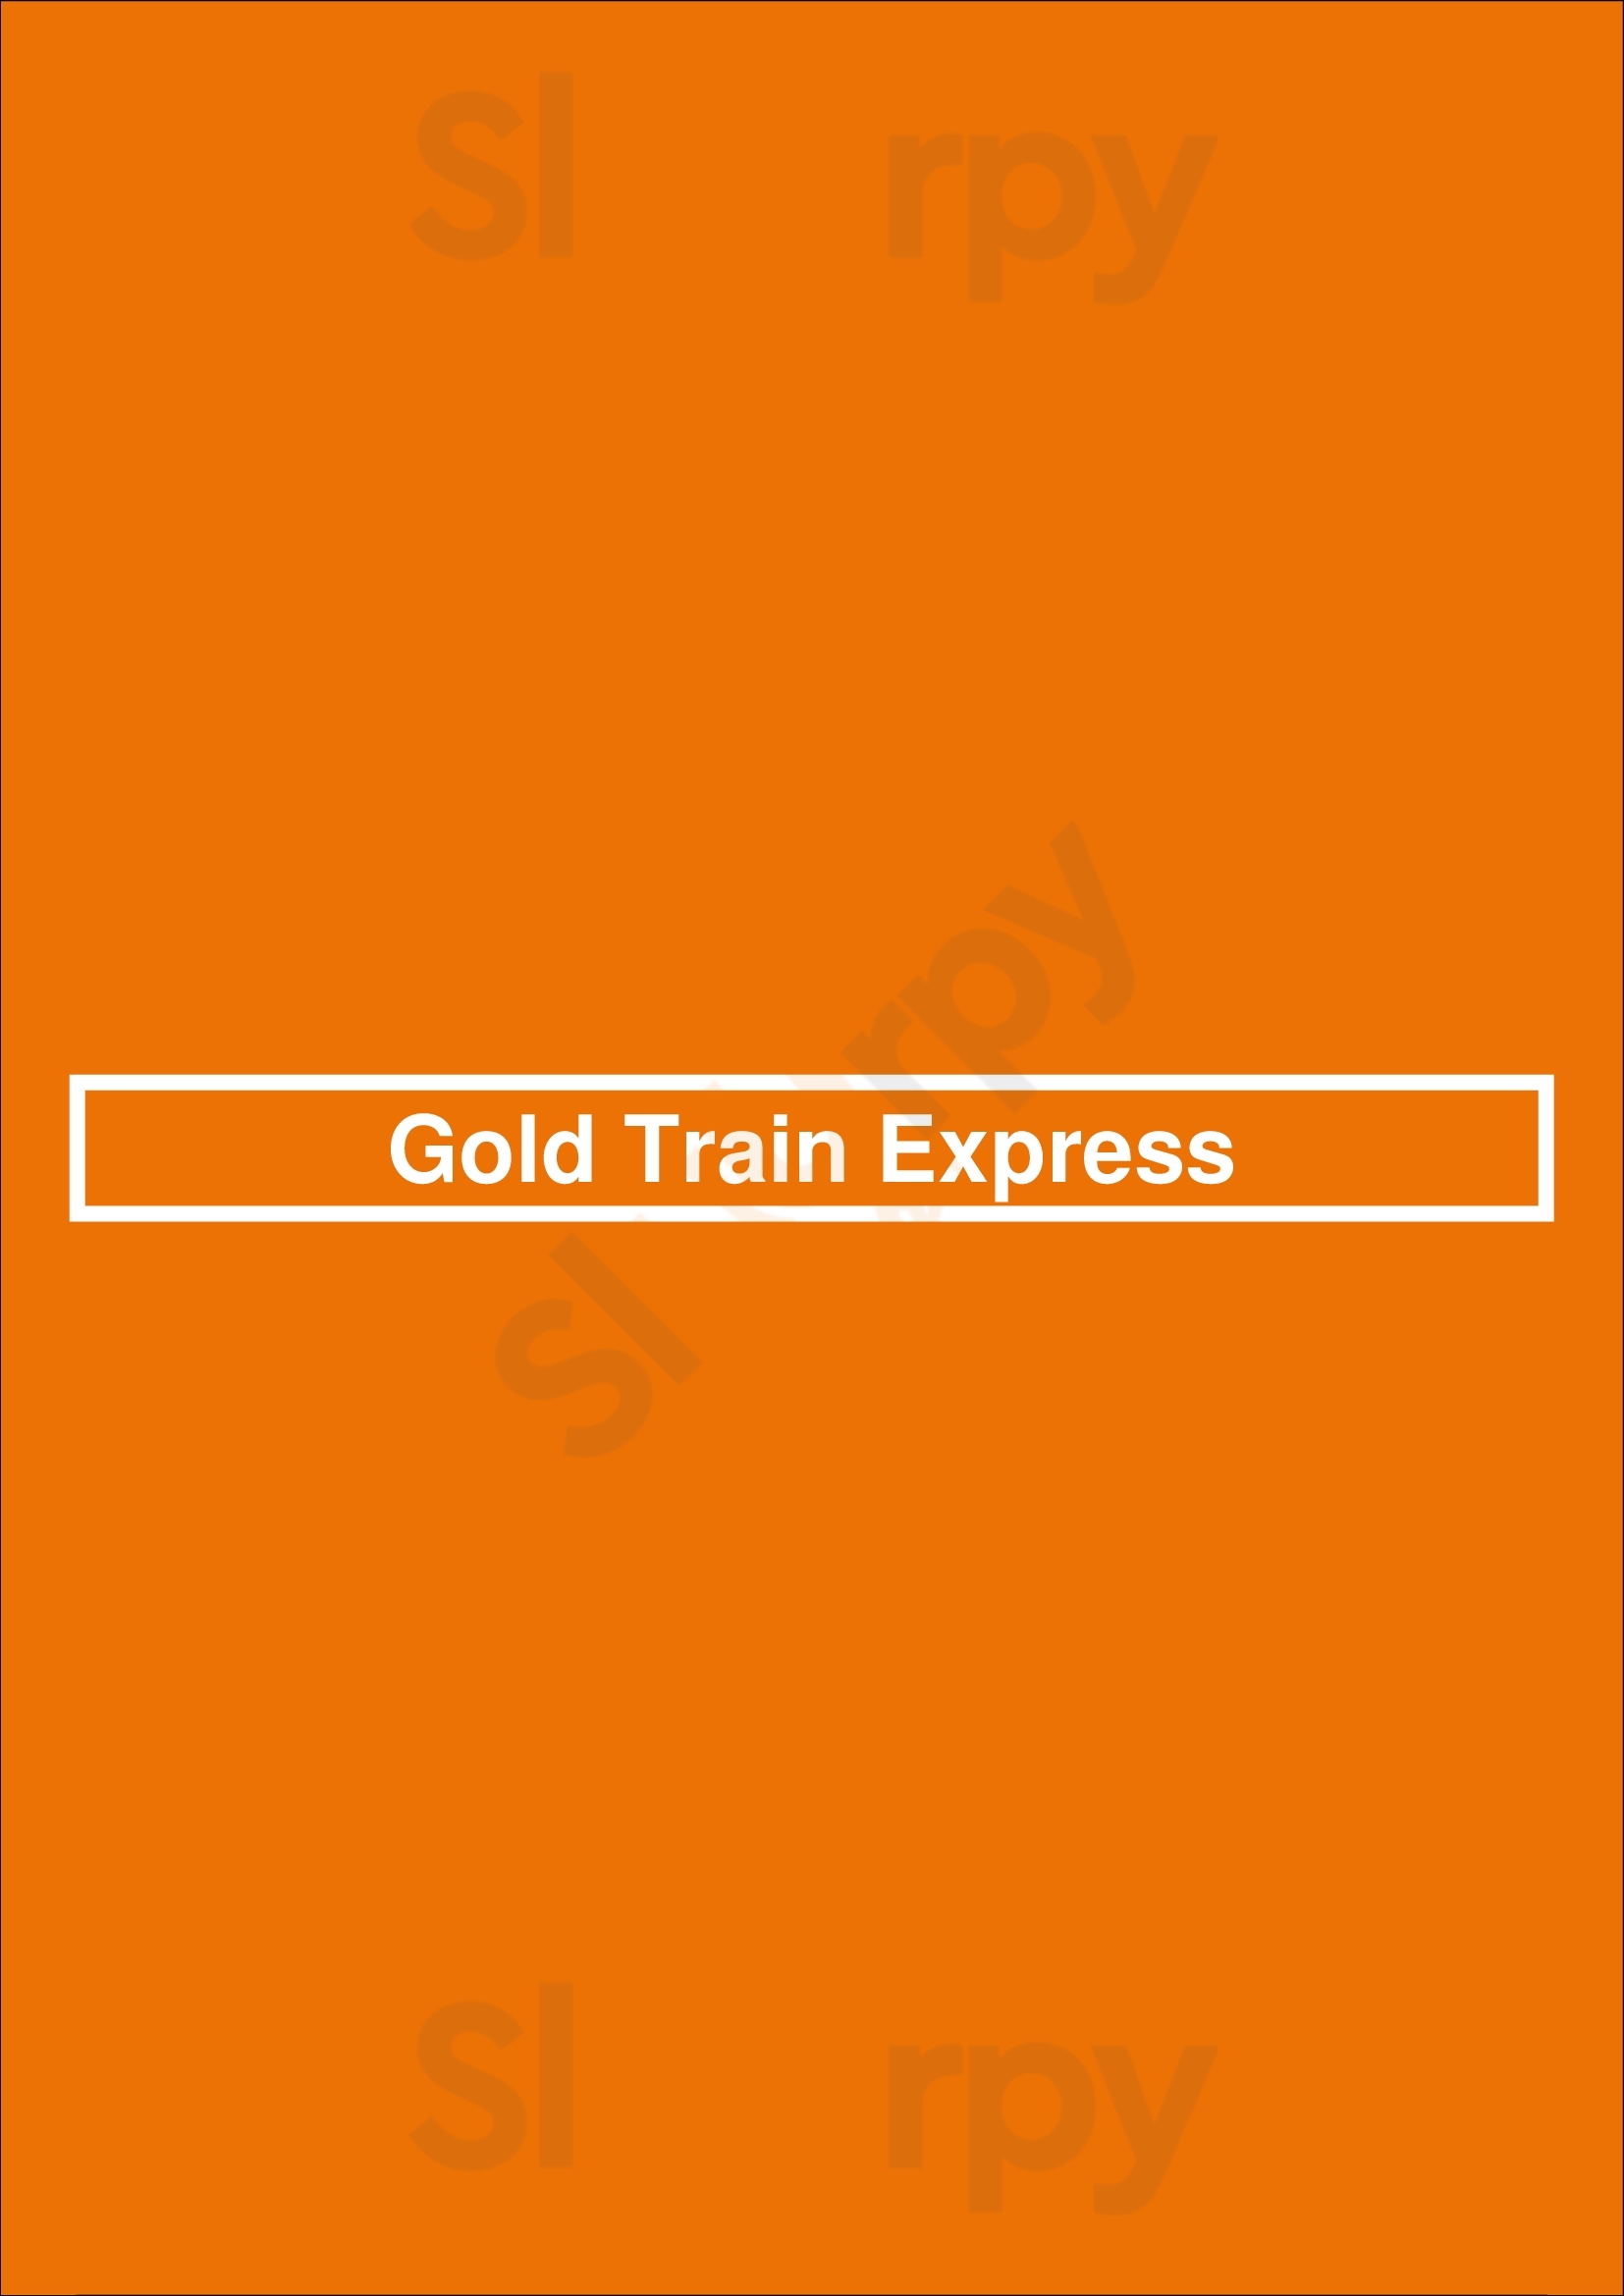 Gold Train Express Vancouver Menu - 1